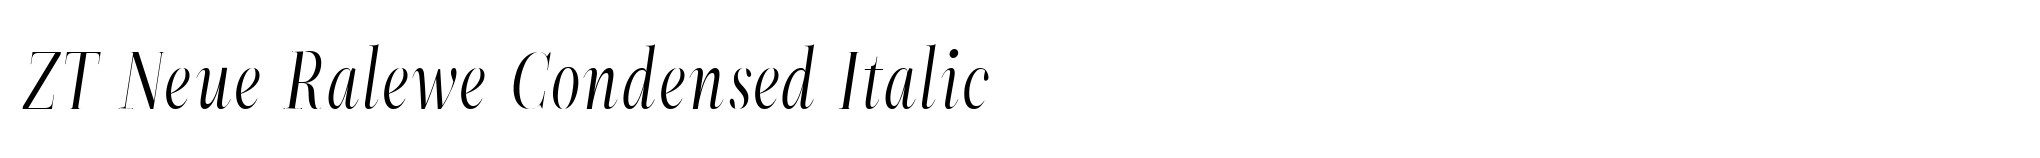 ZT Neue Ralewe Condensed Italic image